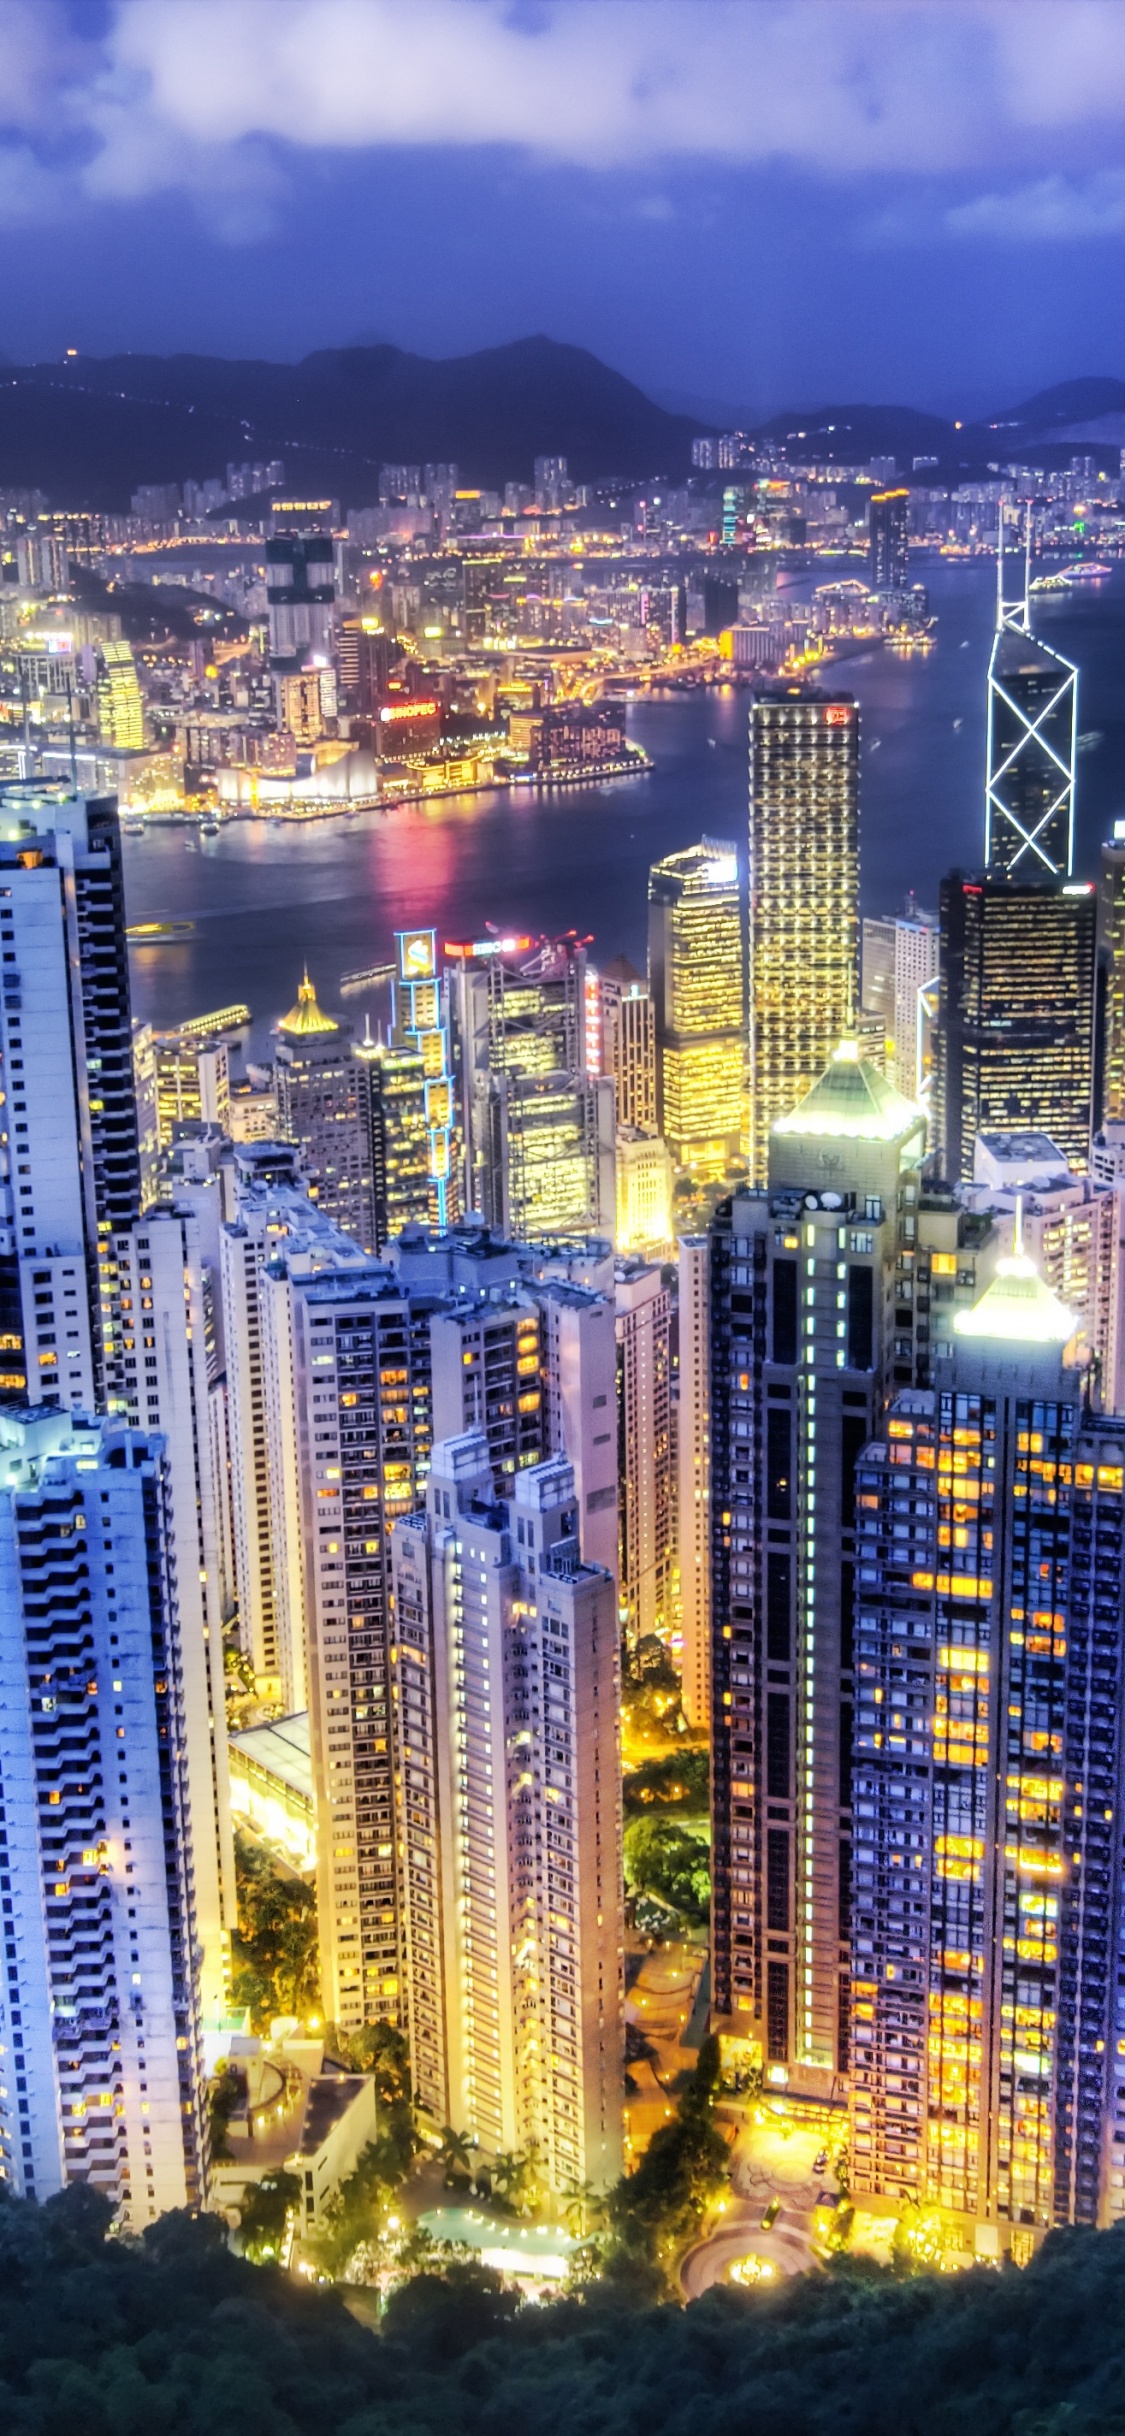 Hong Kong City 4K Wallpaper, Aerial view, Night lights, Cityscape